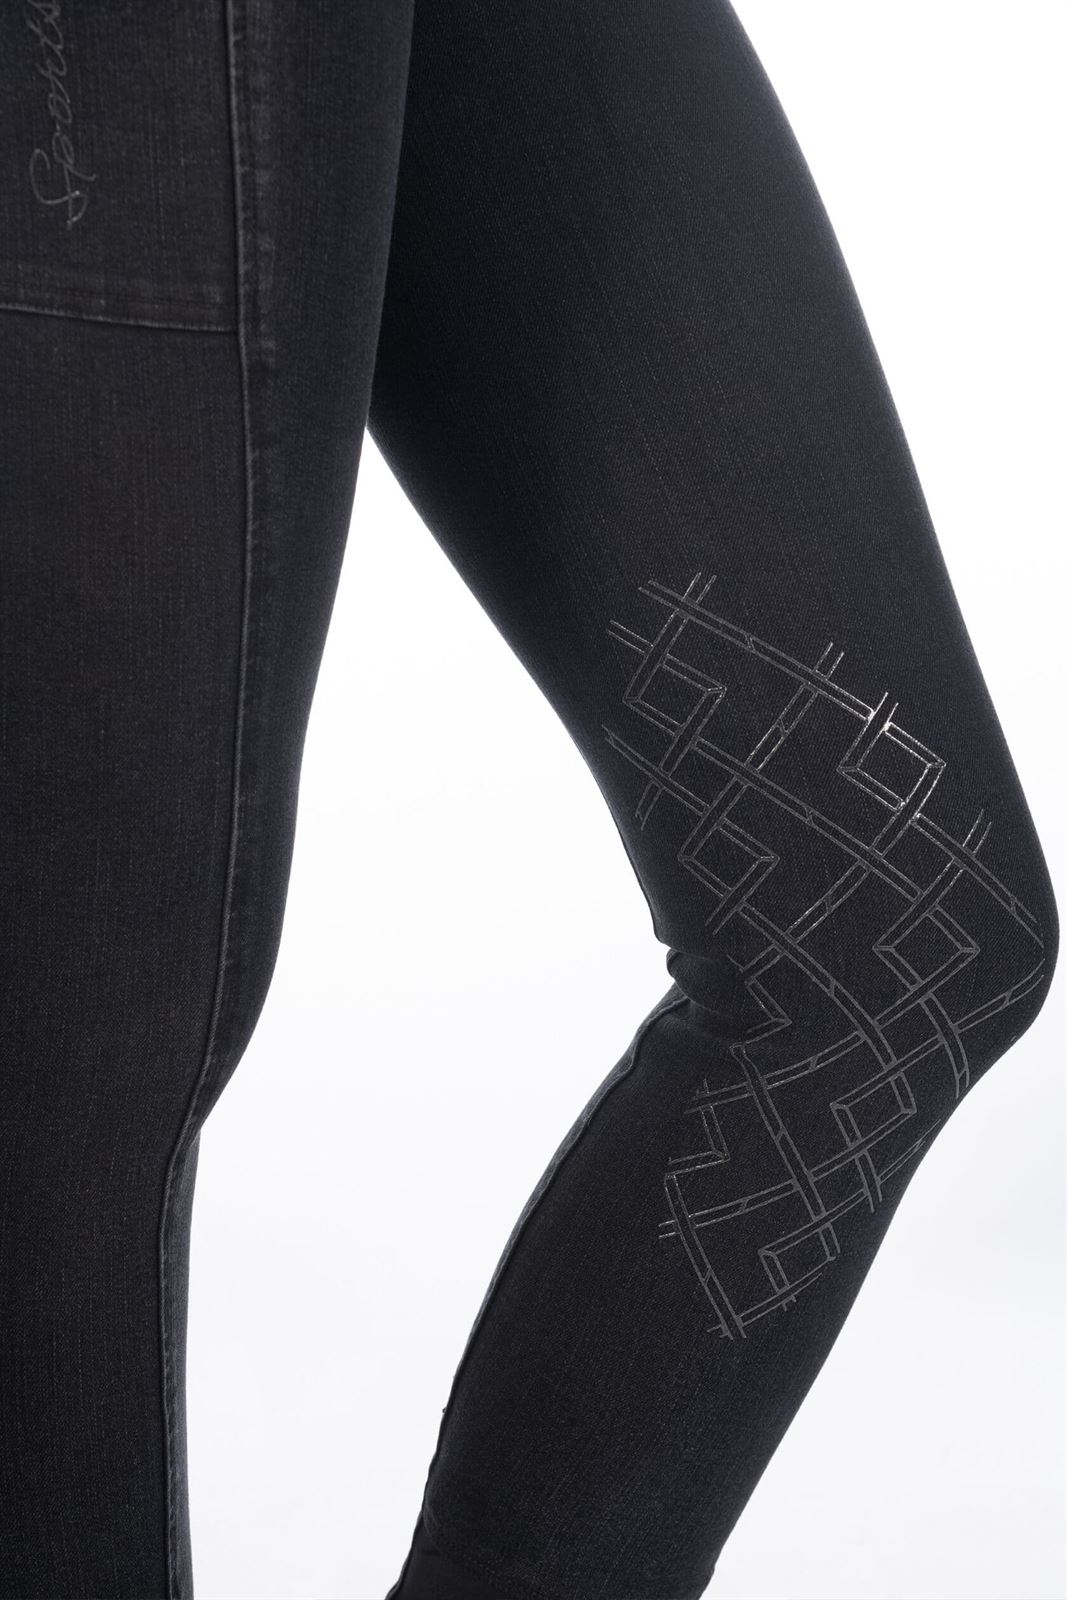 Pantalón mujer HKM Sports Equipment DENIM (vaquero) color negro rodilla grip - Imagen 8